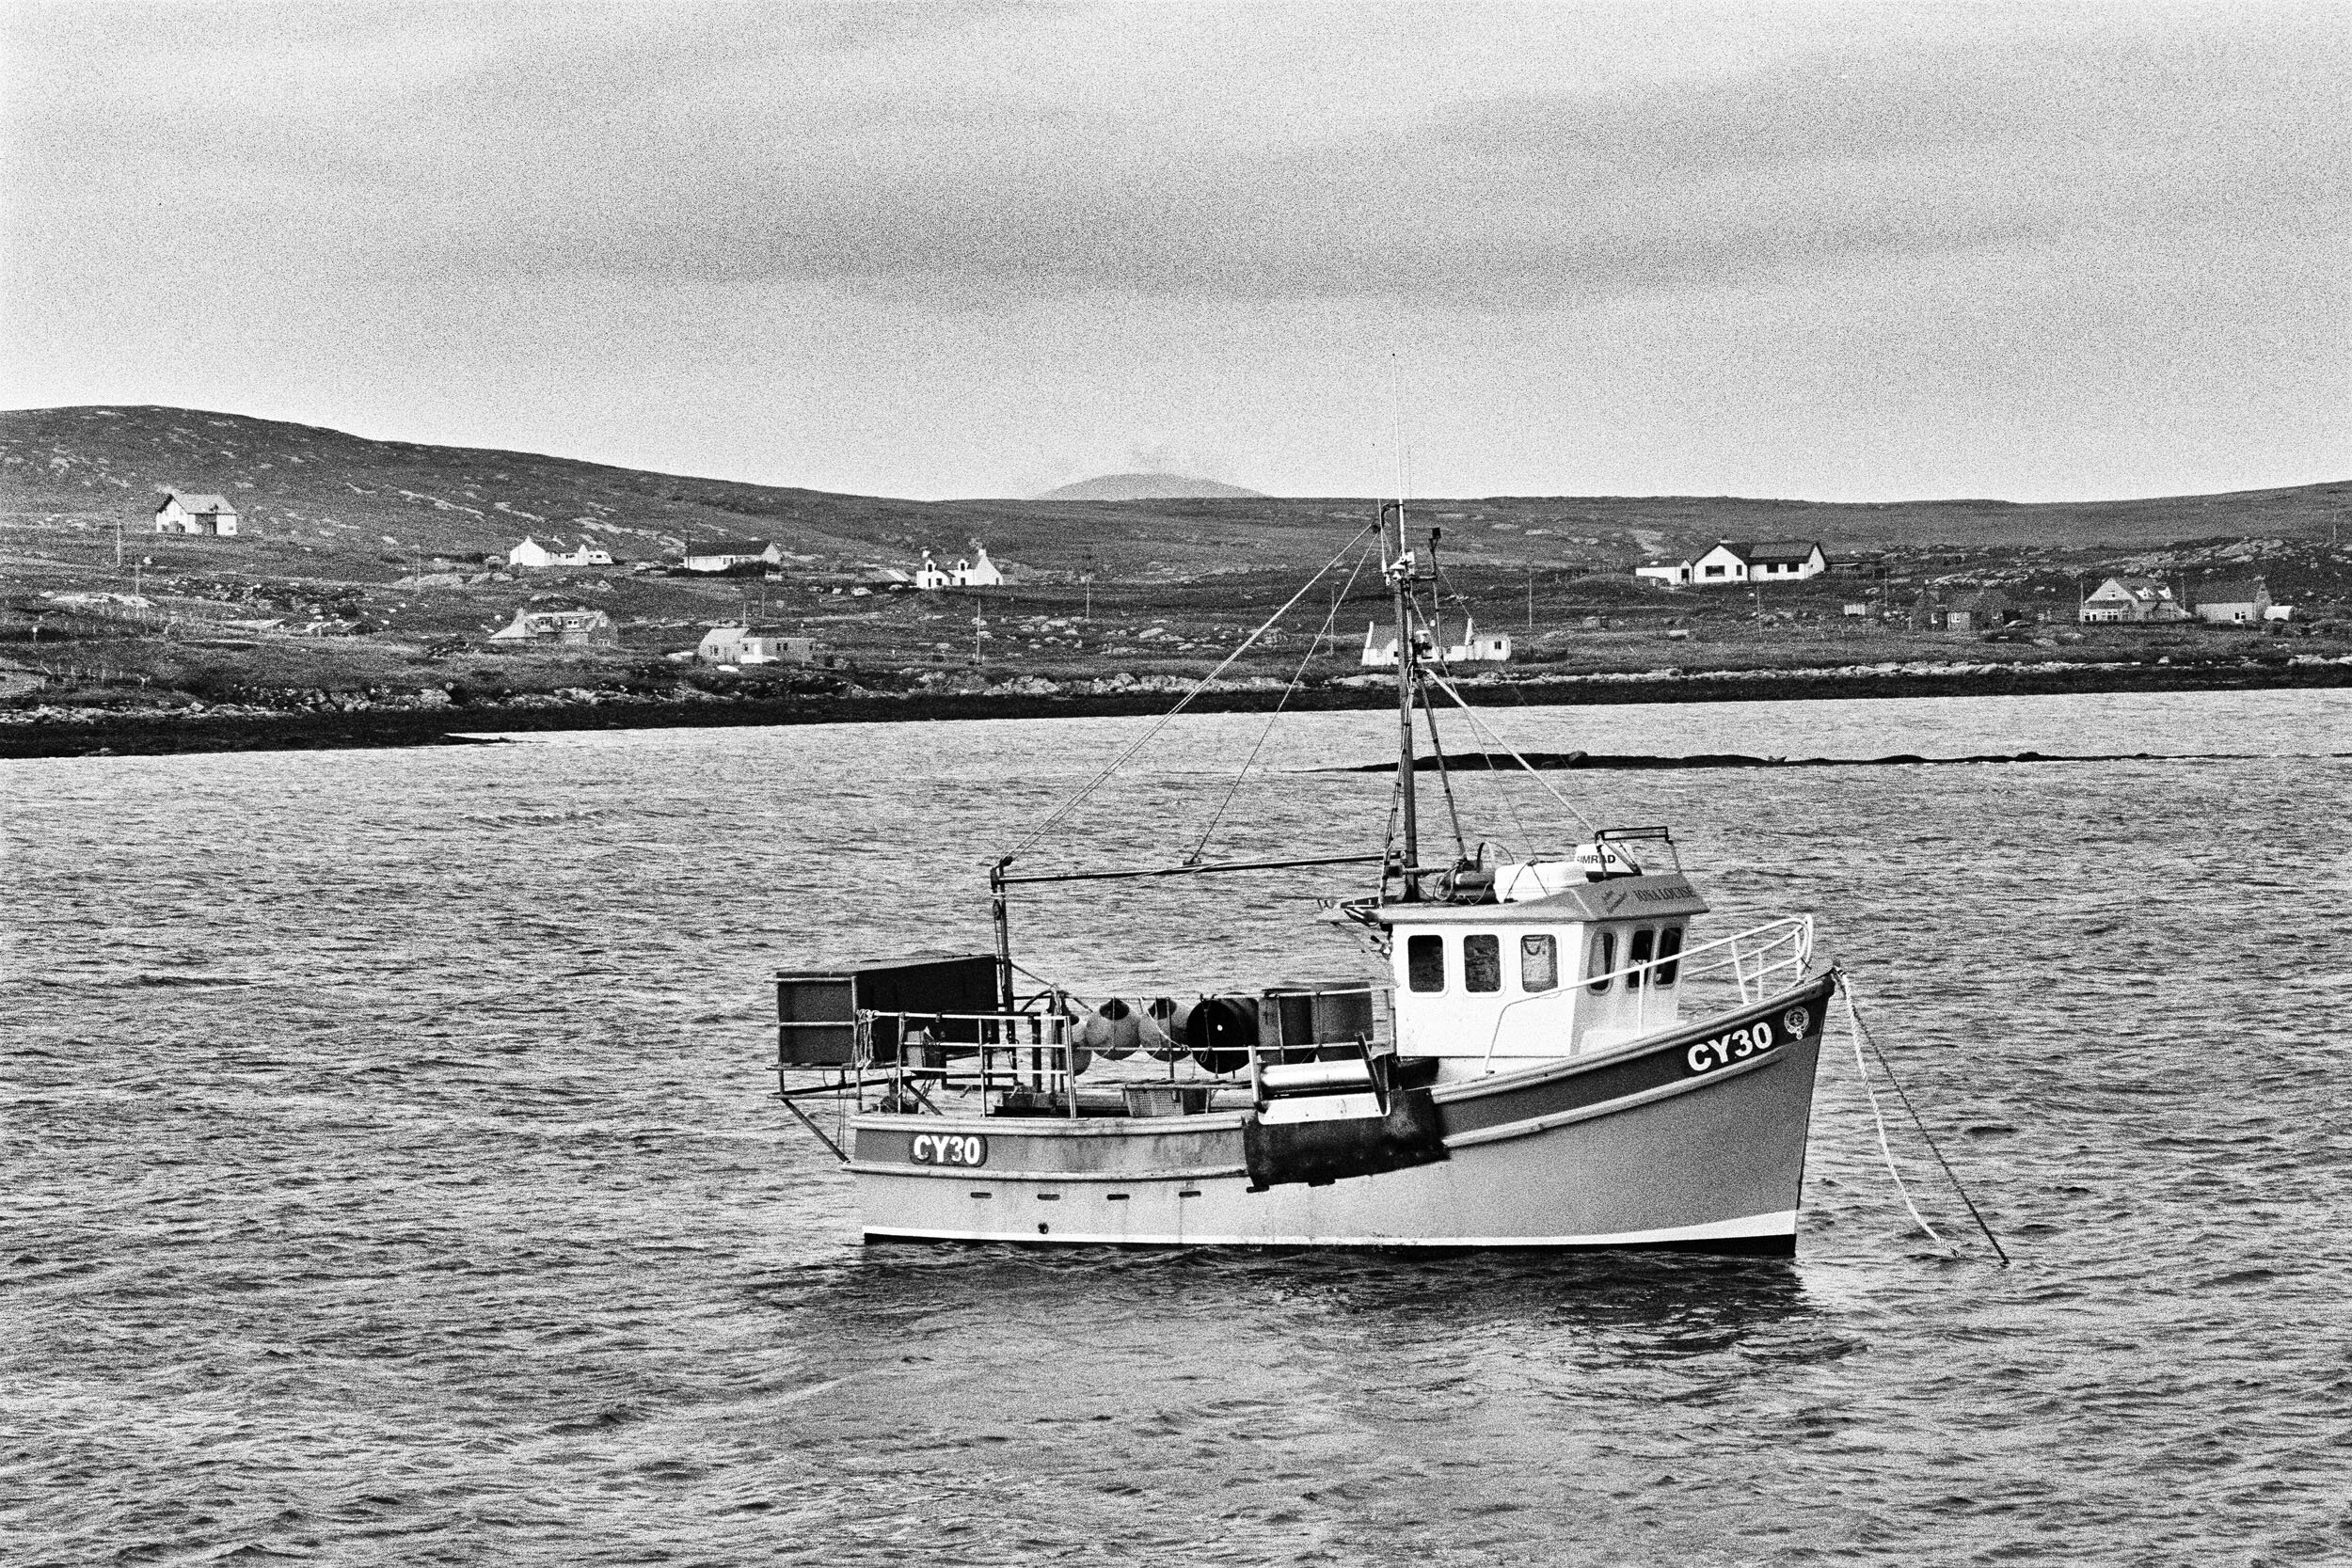  Fishing Boat, Berneray Harbour, Isle of Berneray, 2019 